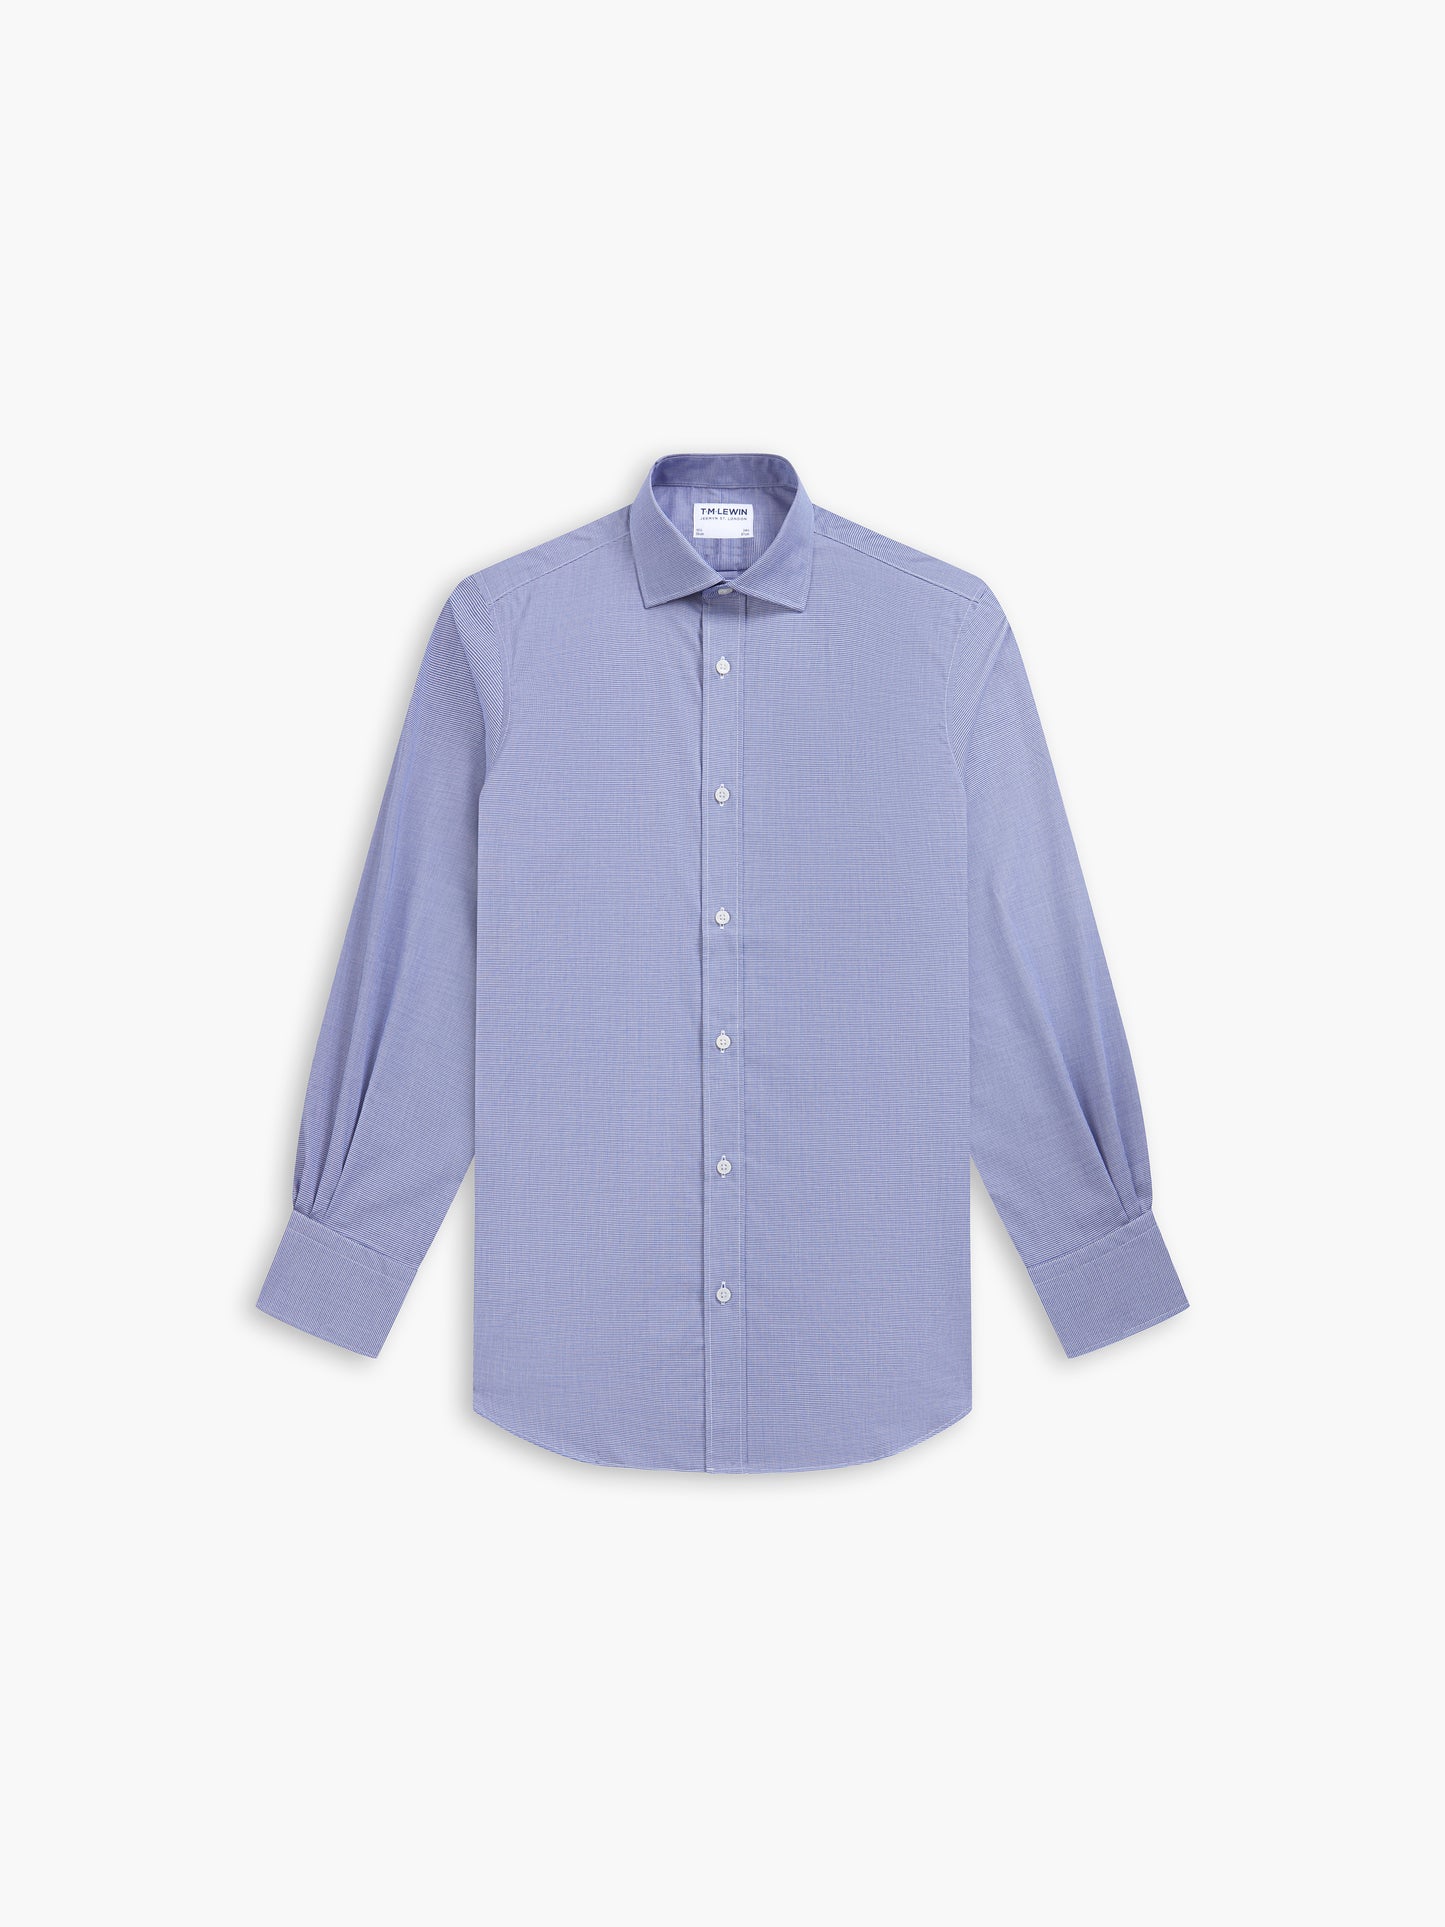 Max Performance Navy Blue Puppytooth Plain Weave Slim Fit Single Cuff Classic Collar Shirt